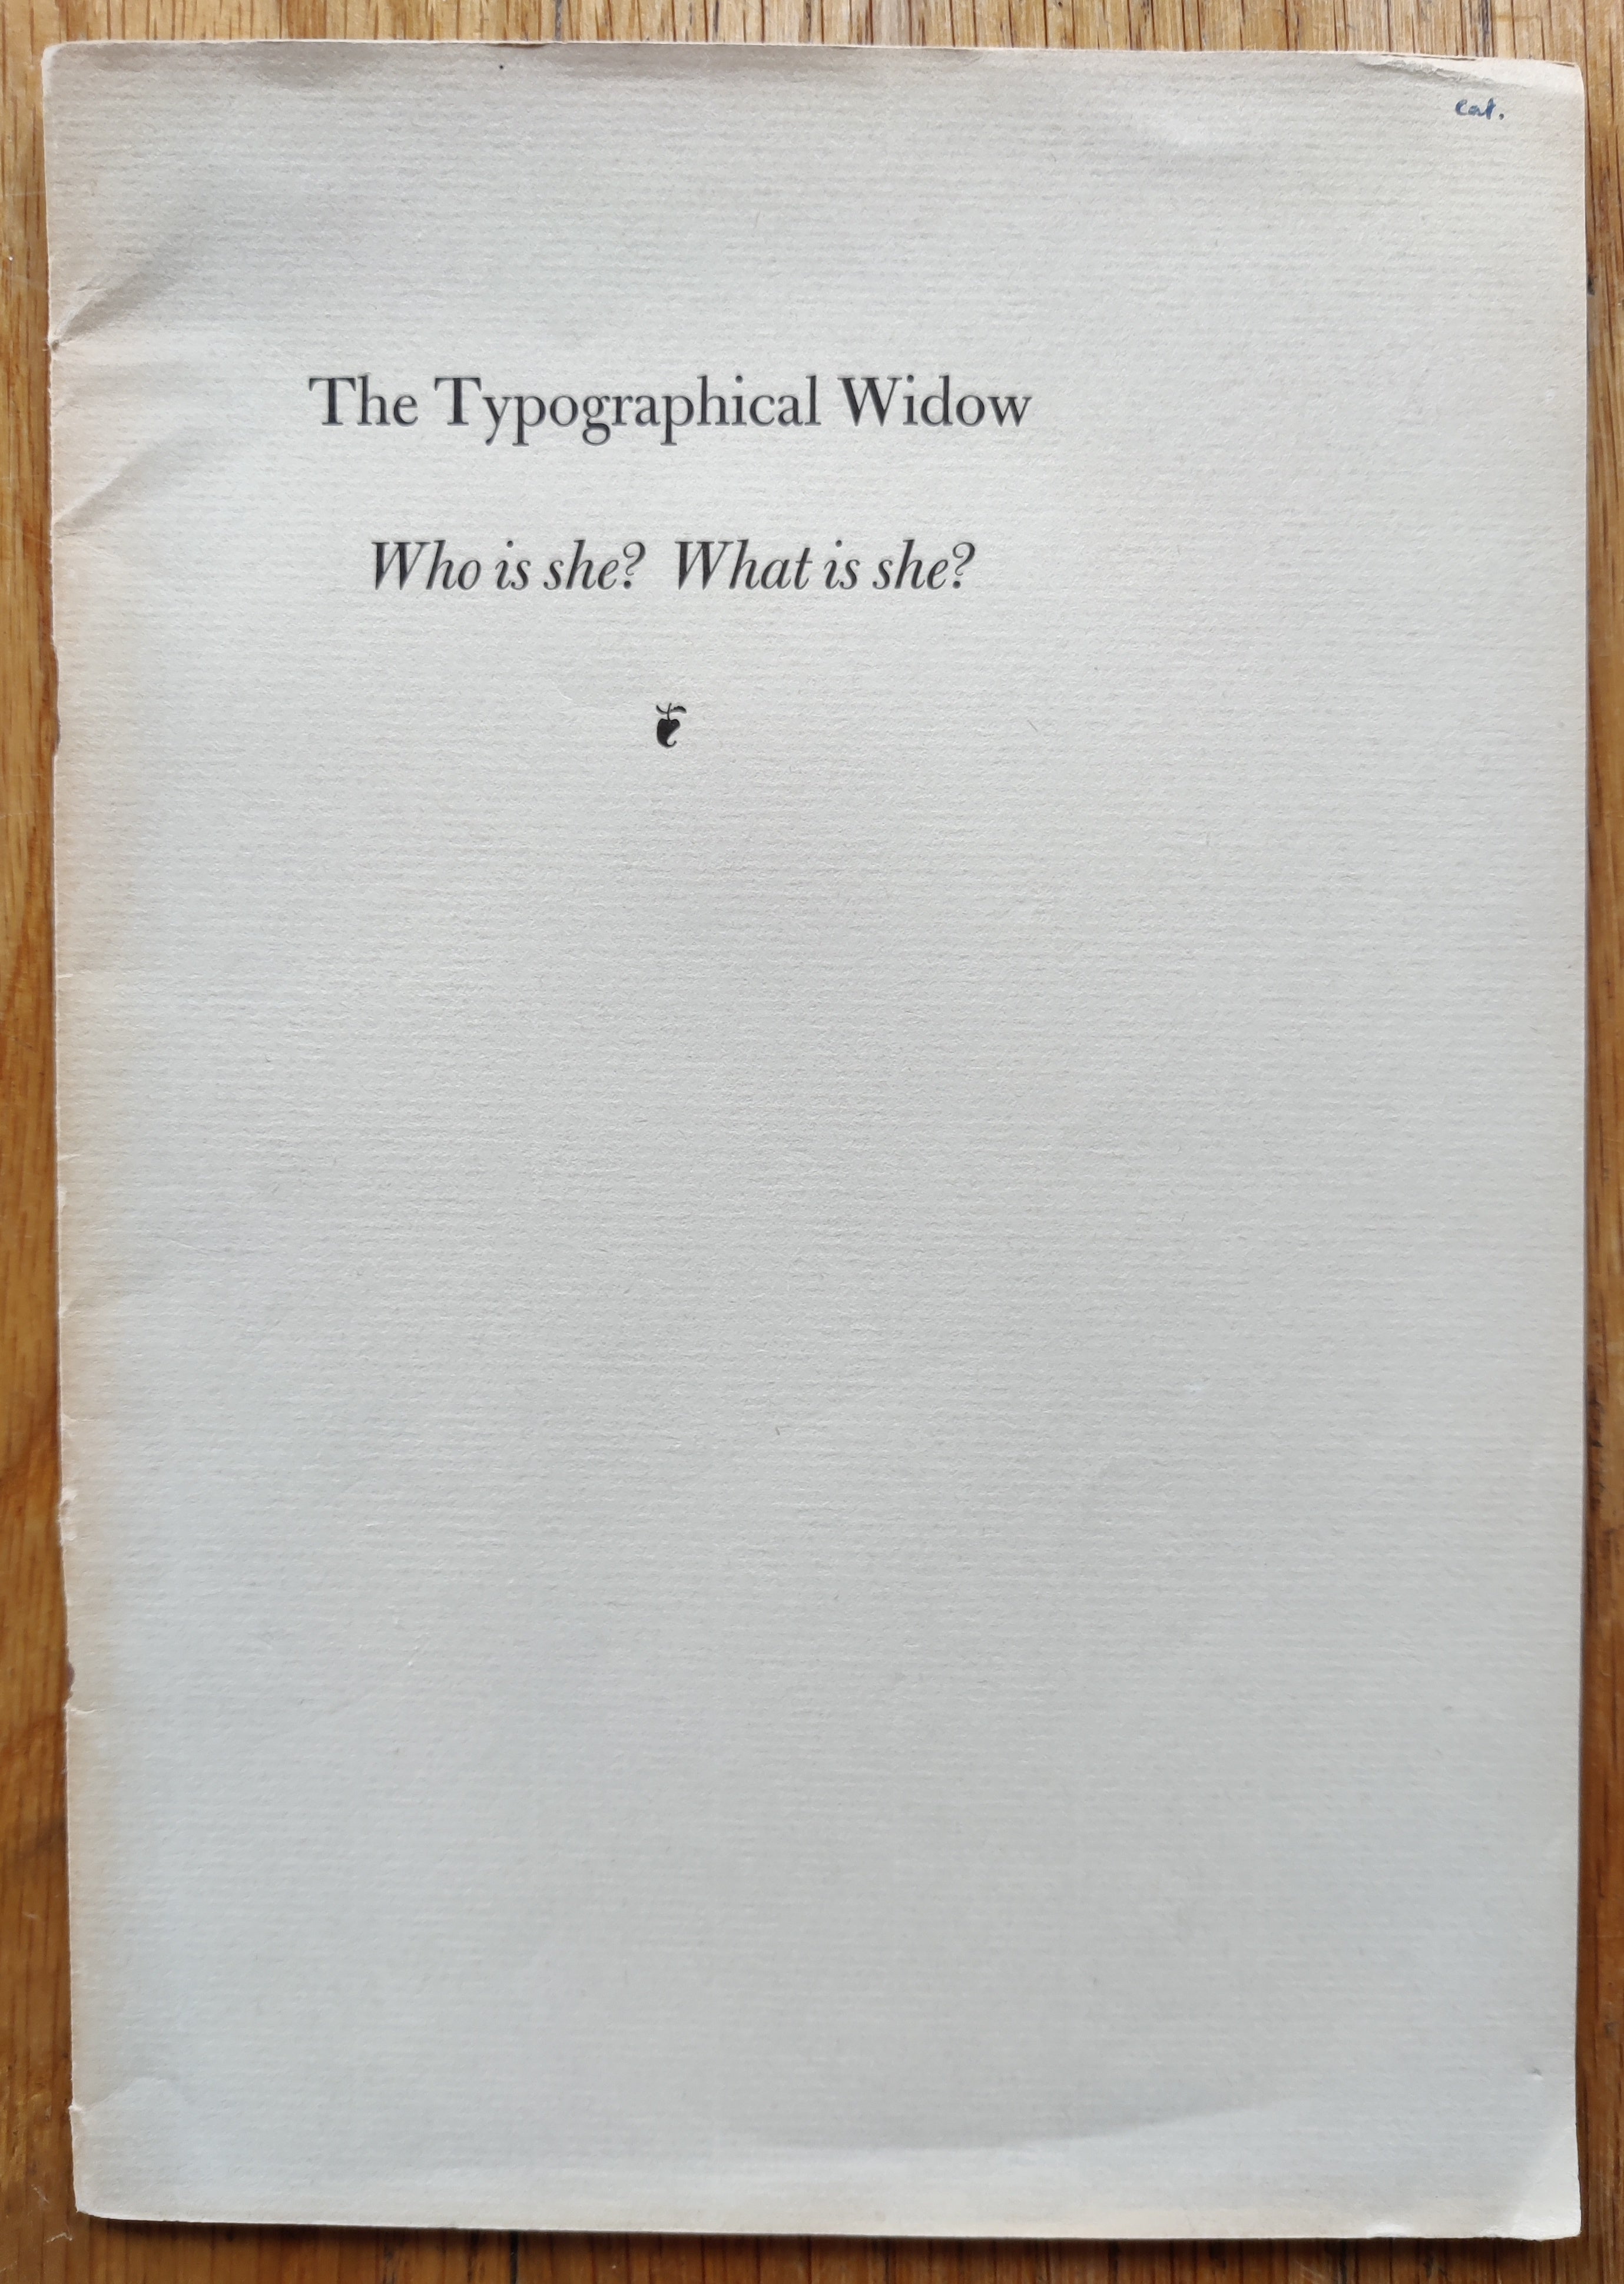 Setanta　Widow:　Rare　she?　is　–　Setanta　is　Who　books　she?　The　What　Typografical　Books